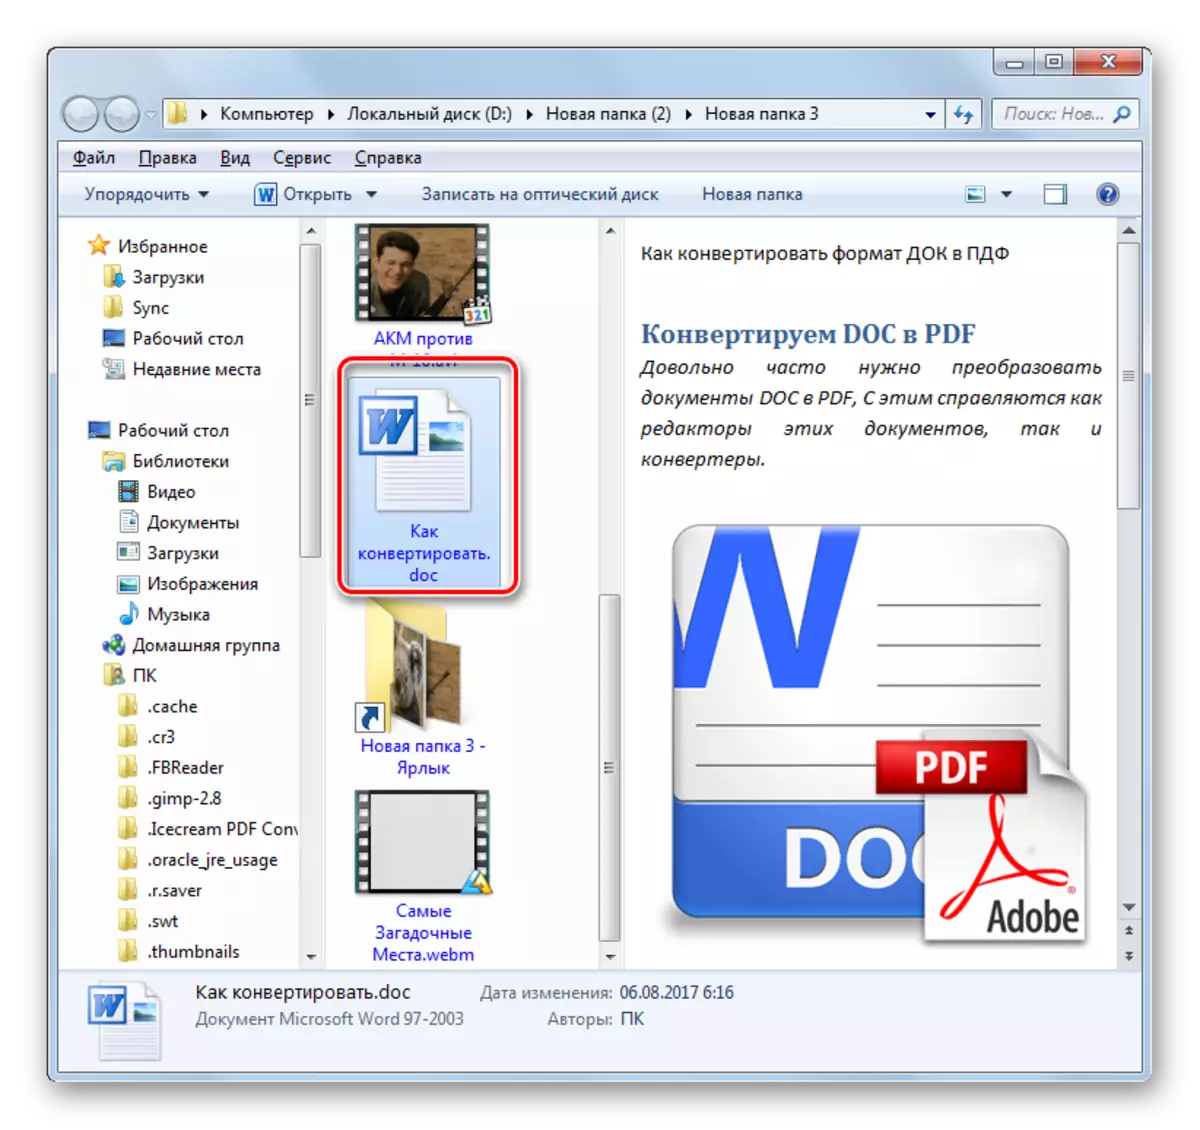 Windows Explorer ውስጥ DOC ቅርጸት ውስጥ የተለወጠ ሰነድ በማግኘት አቃፊ